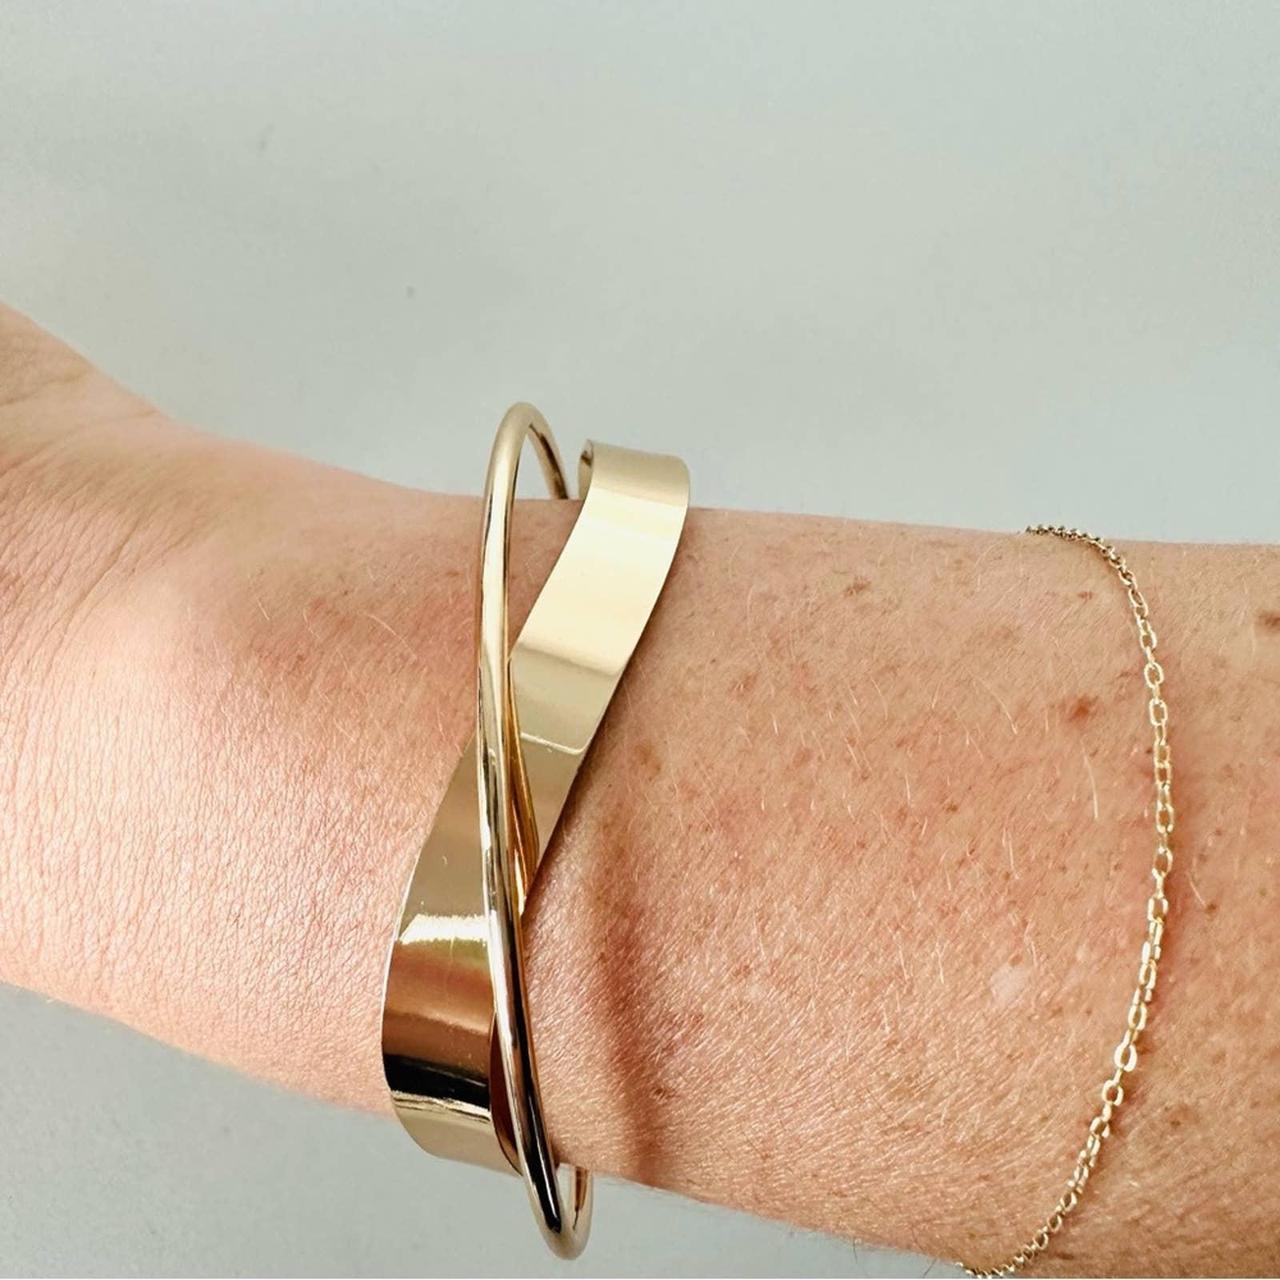 Shayla 18K Gold Cuff Bracelet - Gold – 18K Gold Plated Sterling Silver,  Cubic Zirconia stones – BaubleBar